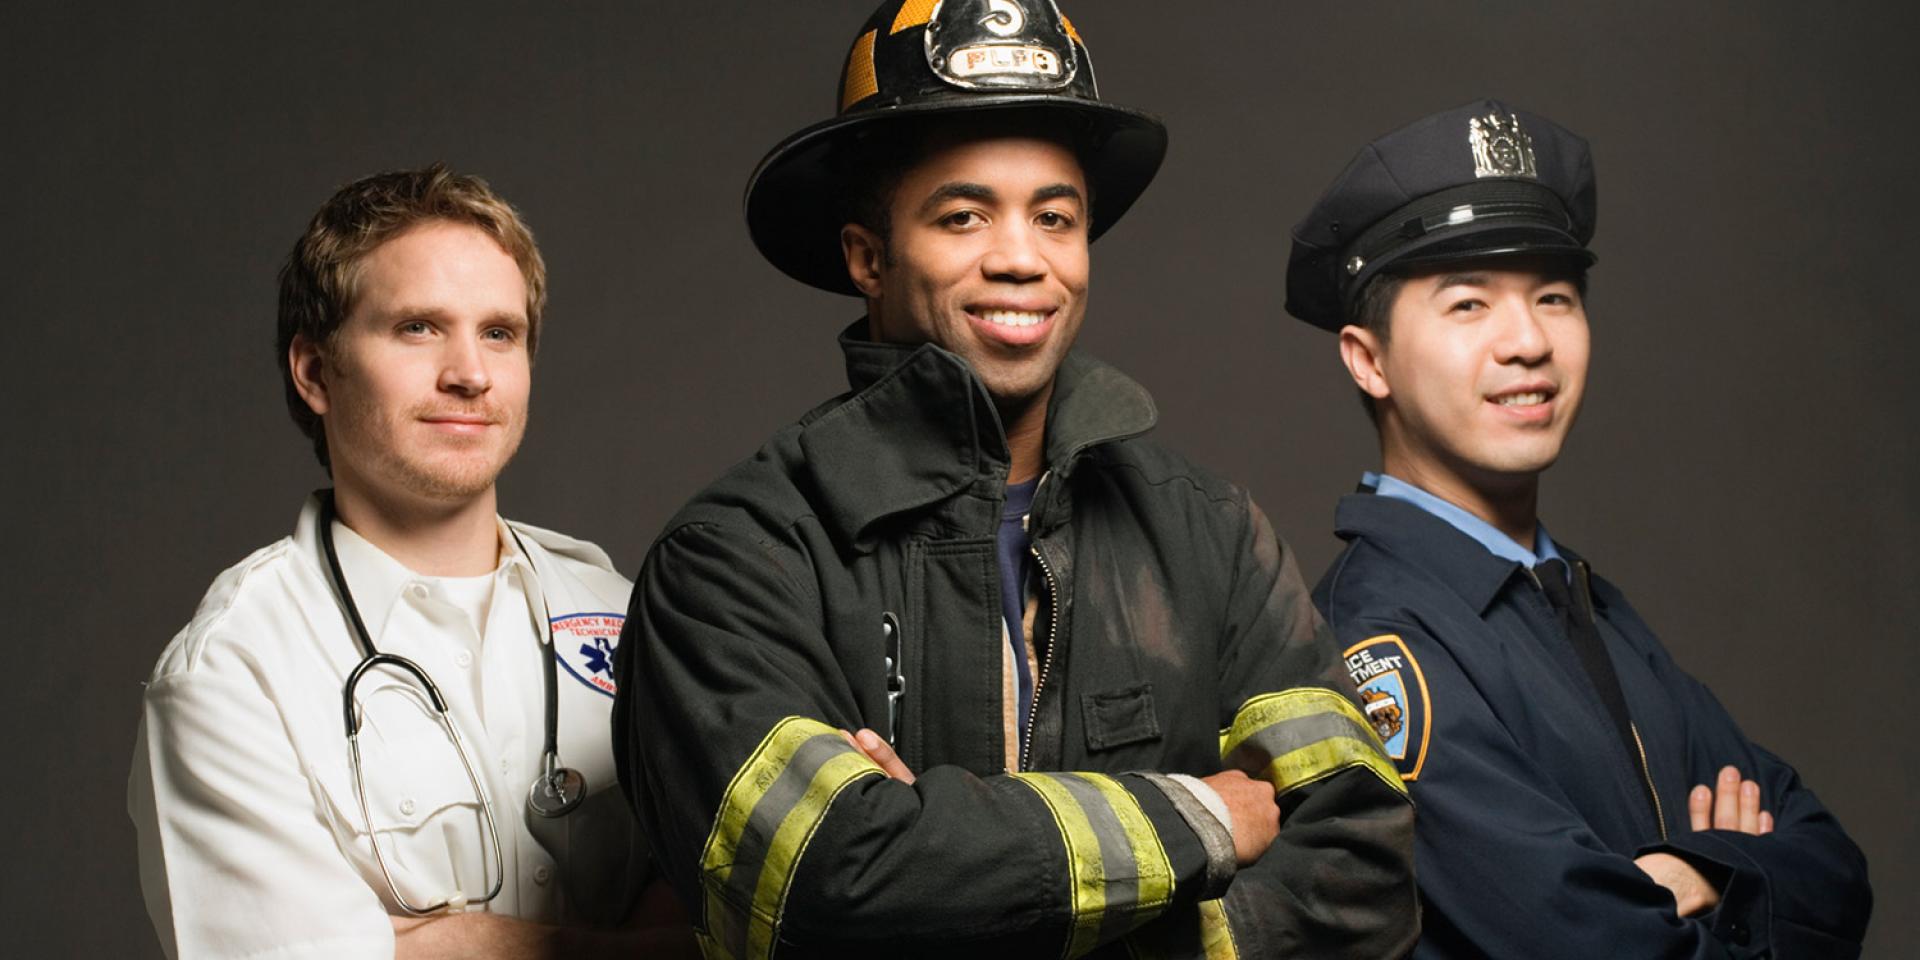 Photo of a doctor, fireman, and policeman